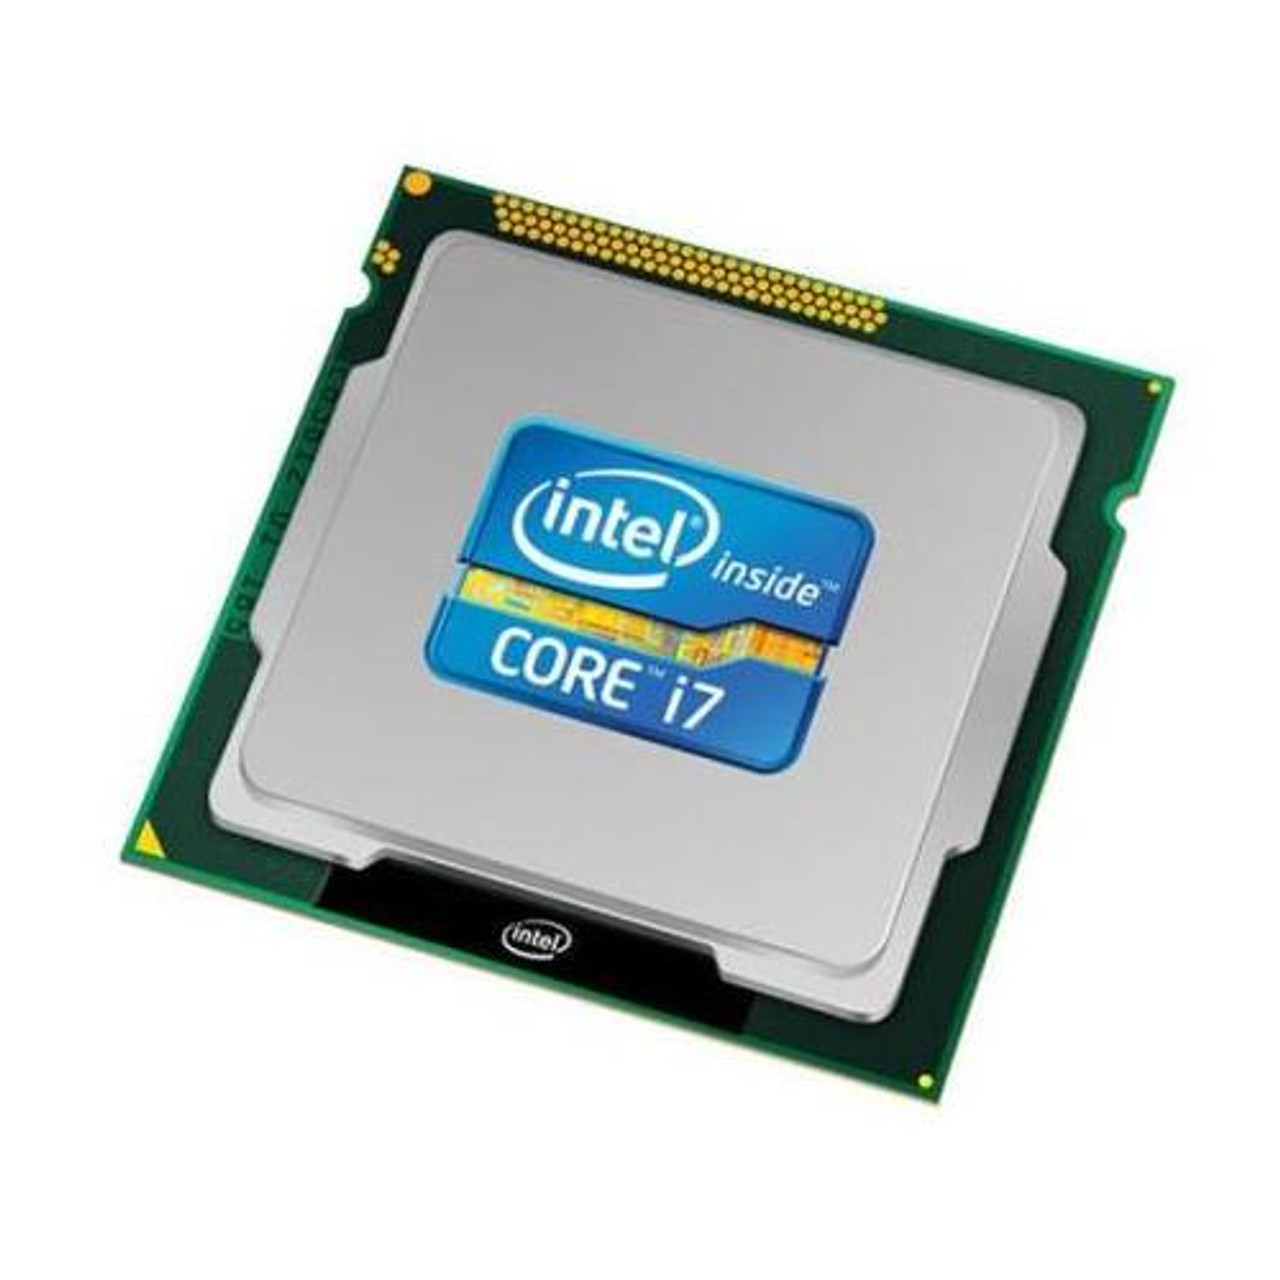 Intel Core i7-3632QM SR0V0 　2.20GHz/ 6MB